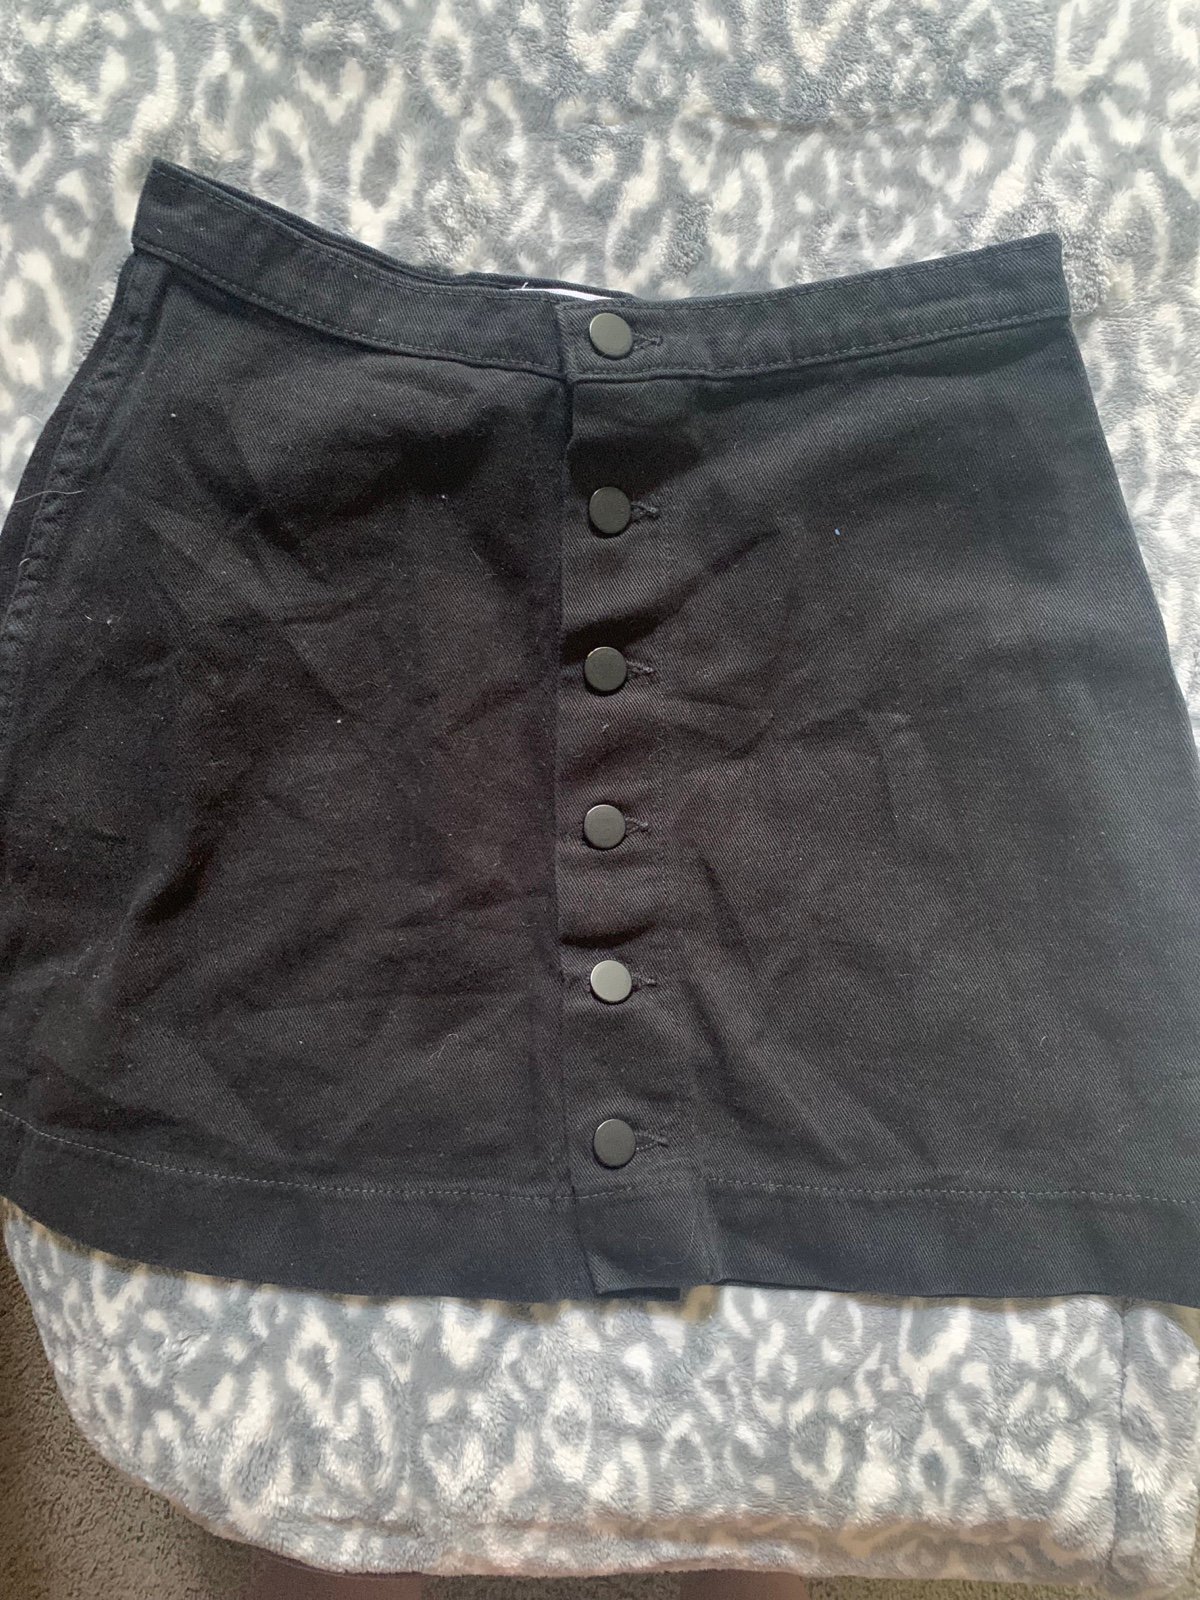 Latest  American Apparel Black Denim Skirt NVo2vmgOq Wh